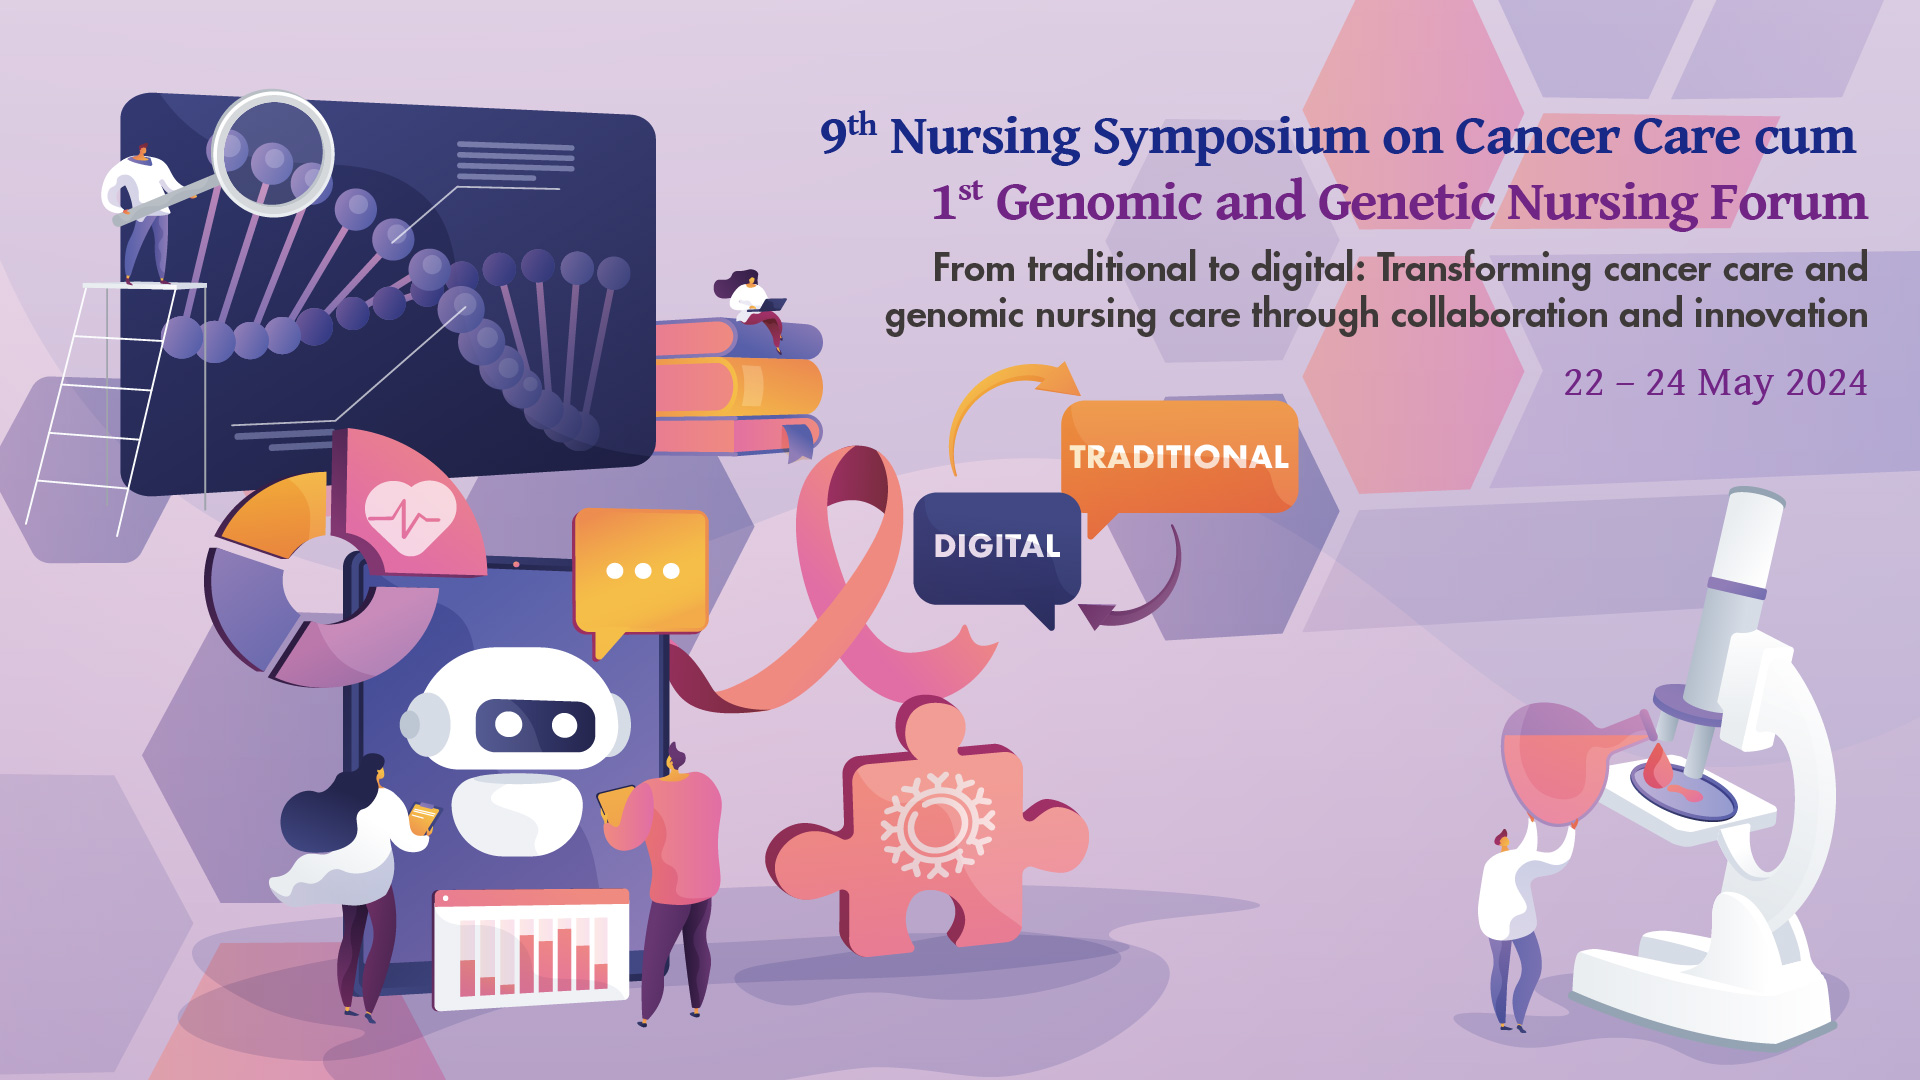 The 9th Nursing Symposium on Cancer Care cum 1st Genomic and Genetic Nursing Forum